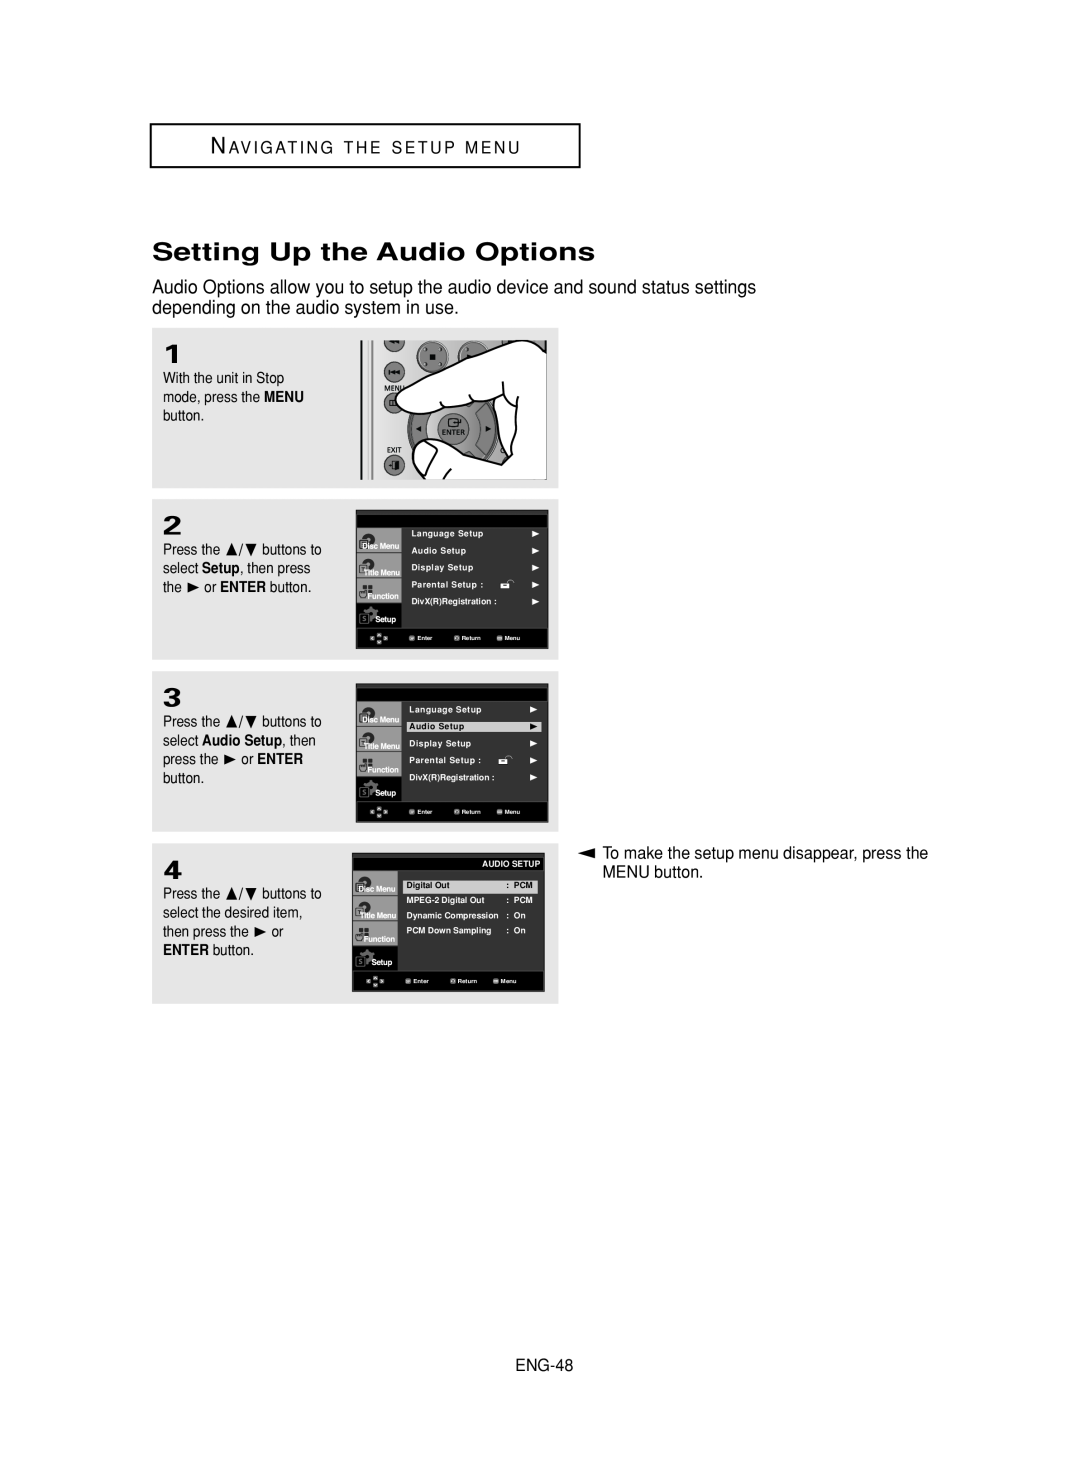 Samsung DVD-FP580, DVD-F1080 manual Setting Up the Audio Options, Nav I G At I N G T H E S E T U P M E N U, ENG-48 